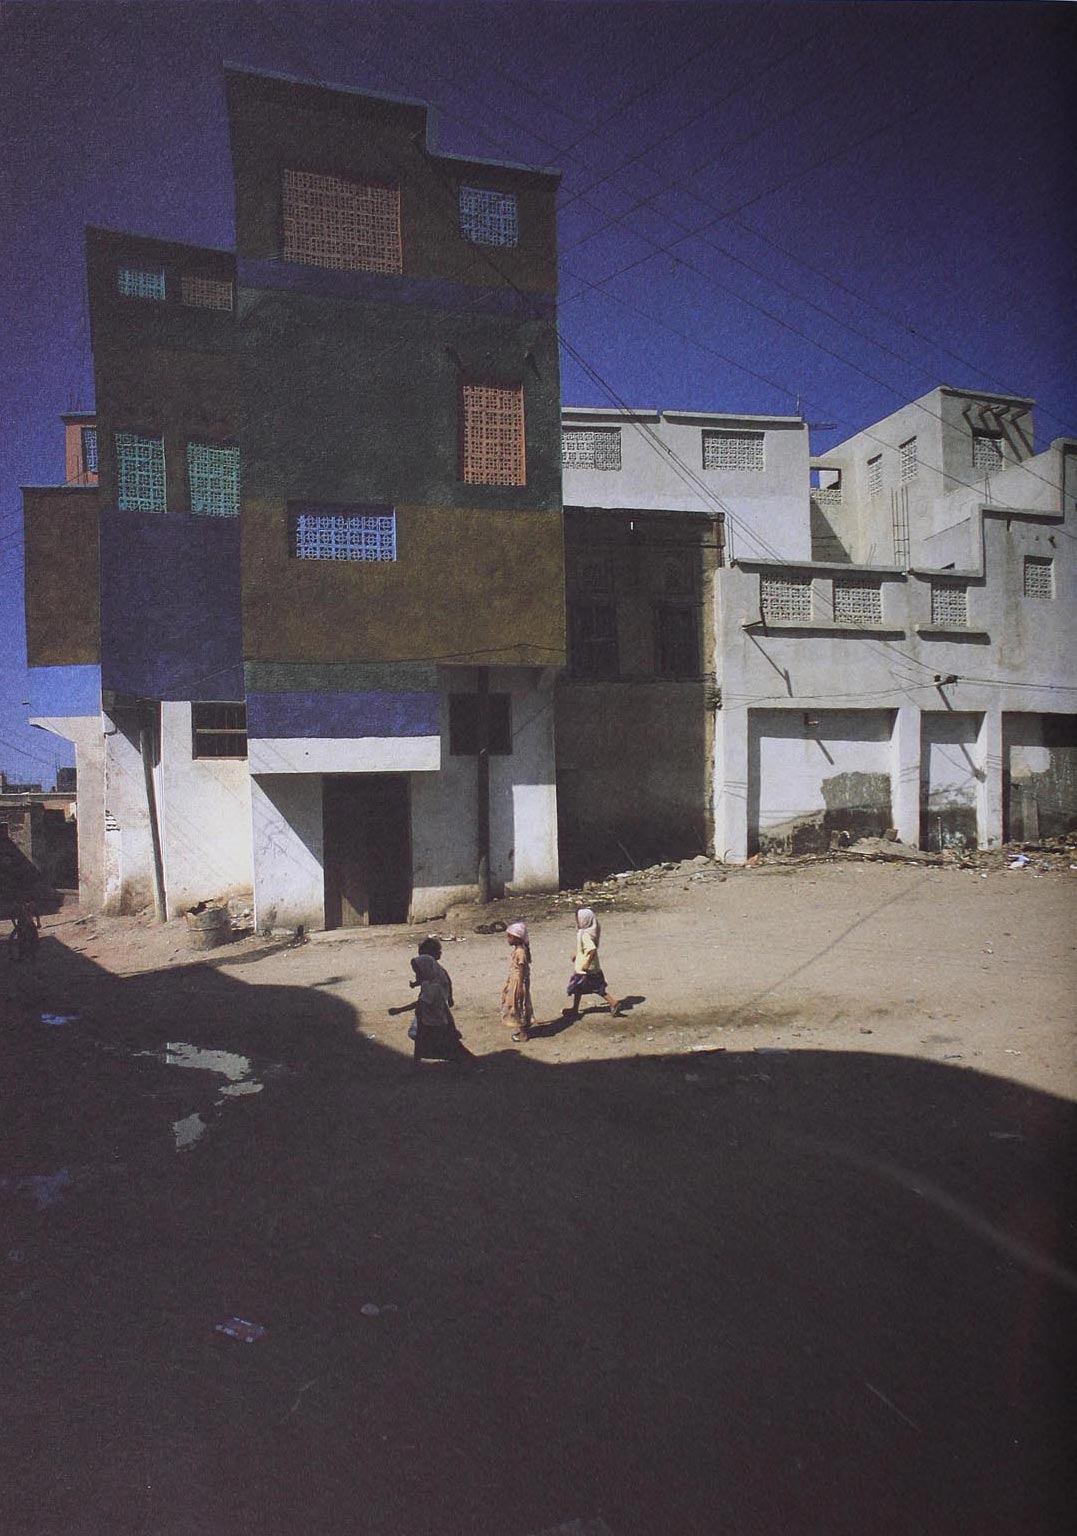 Bayt El Faqih, North Yemen, 1980. Photograph by E.Sottsass